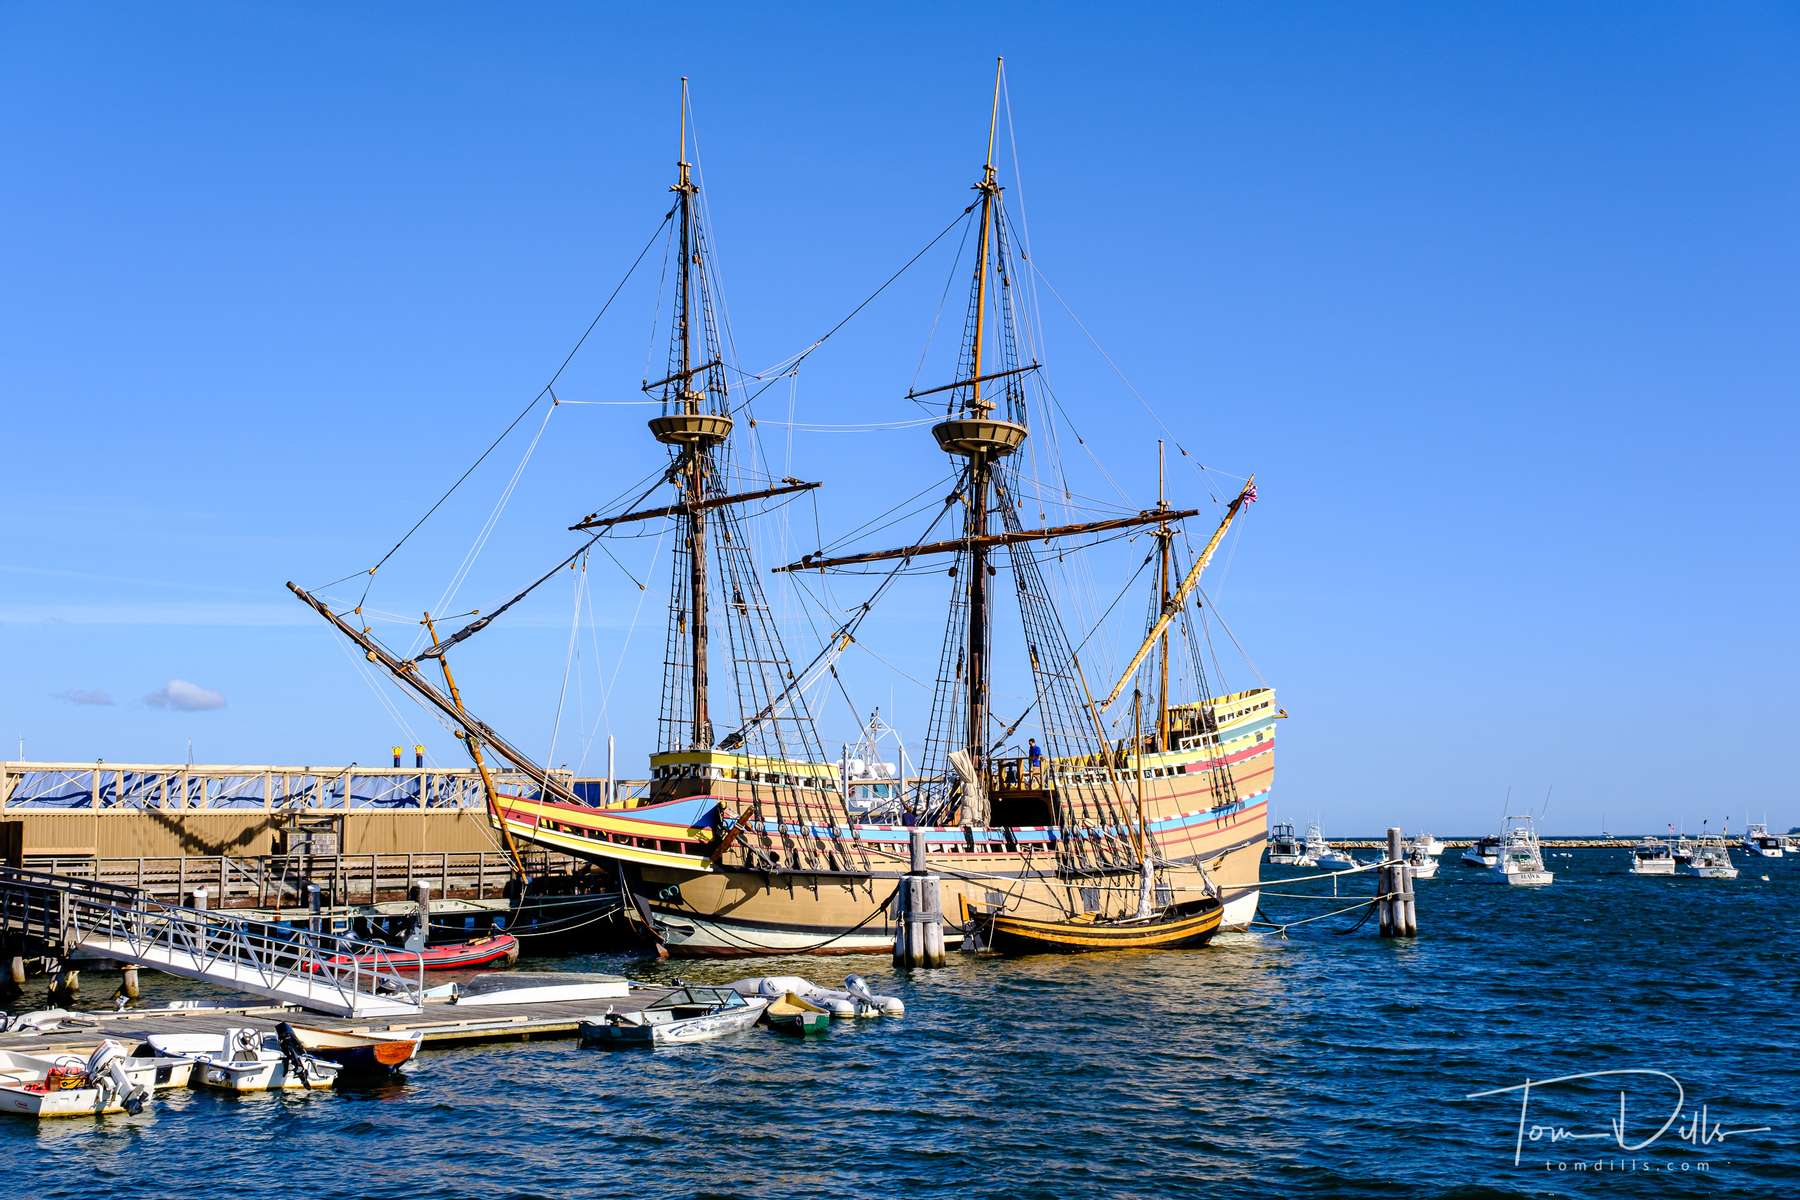 The Mayflower II replica in Plymouth, Massachusetts